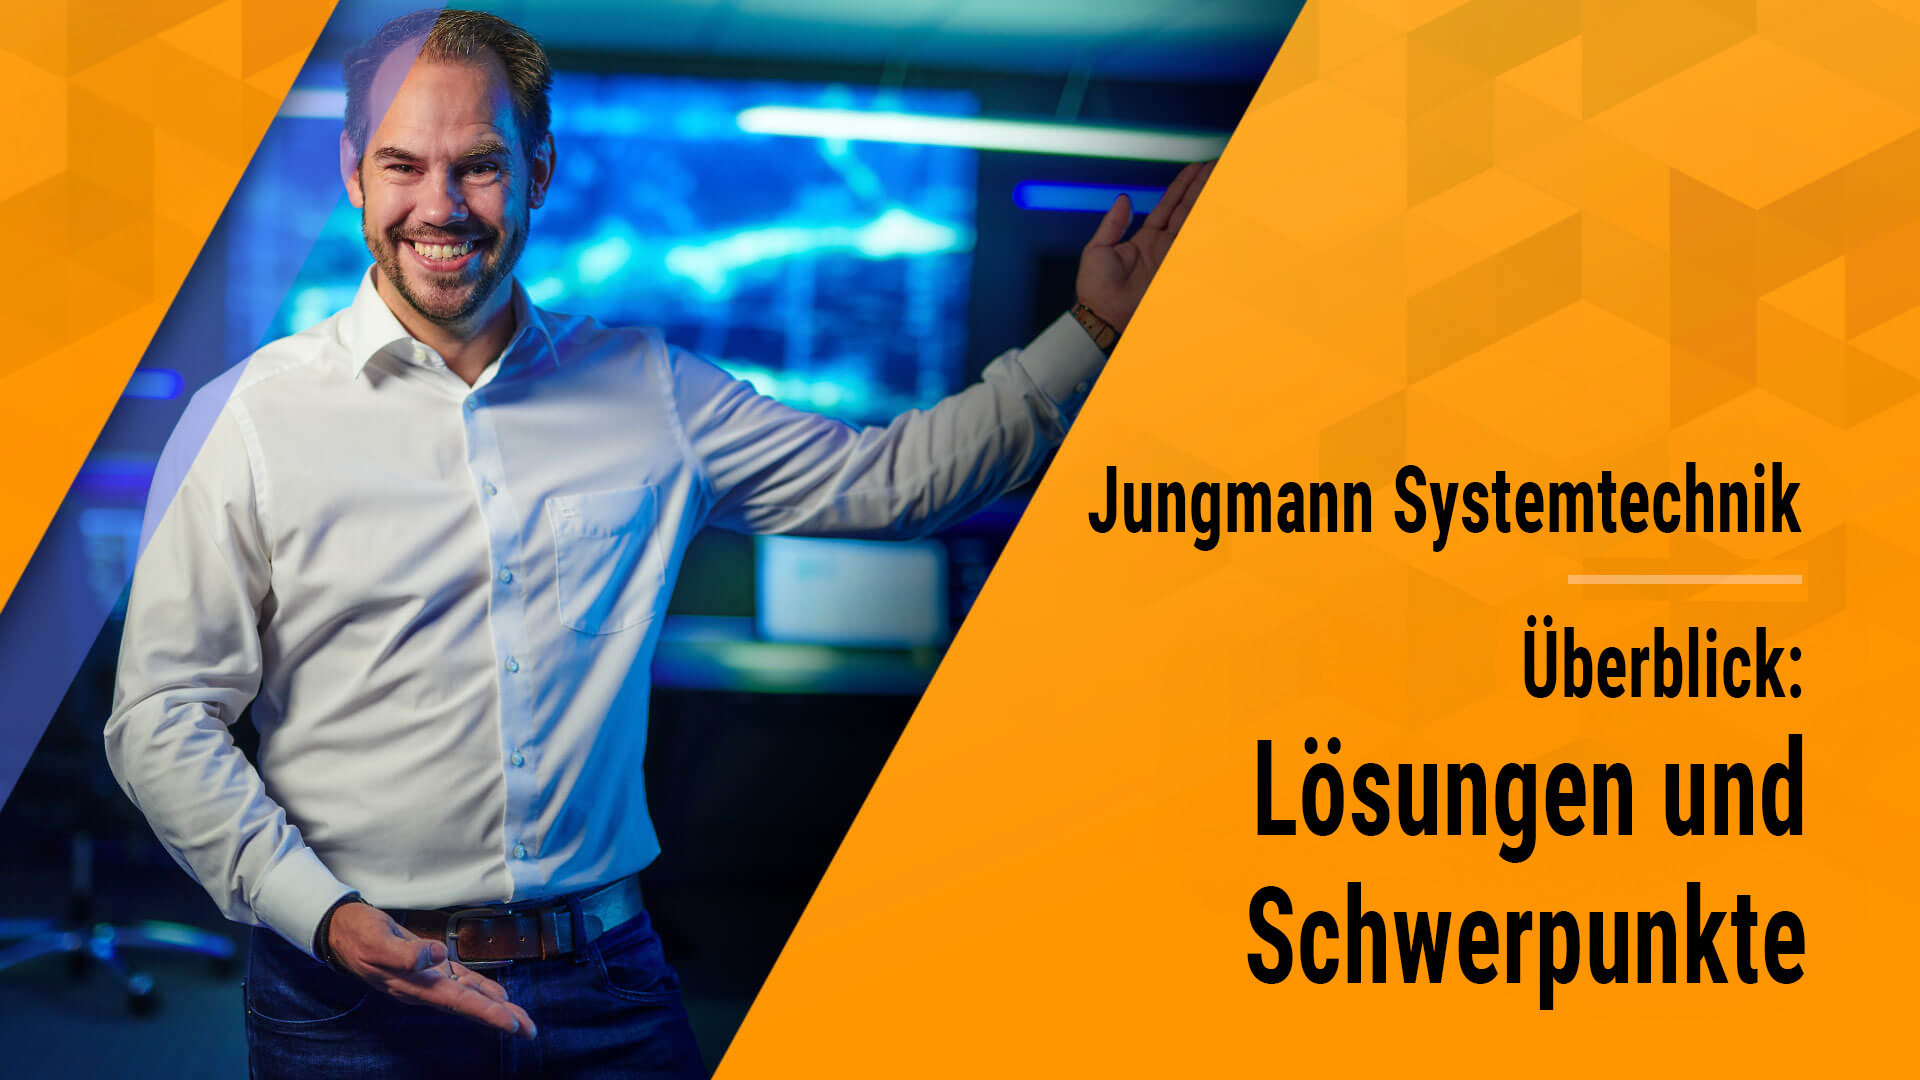 Jungmann Systemtechnik - Solutions - Video Thumbnail